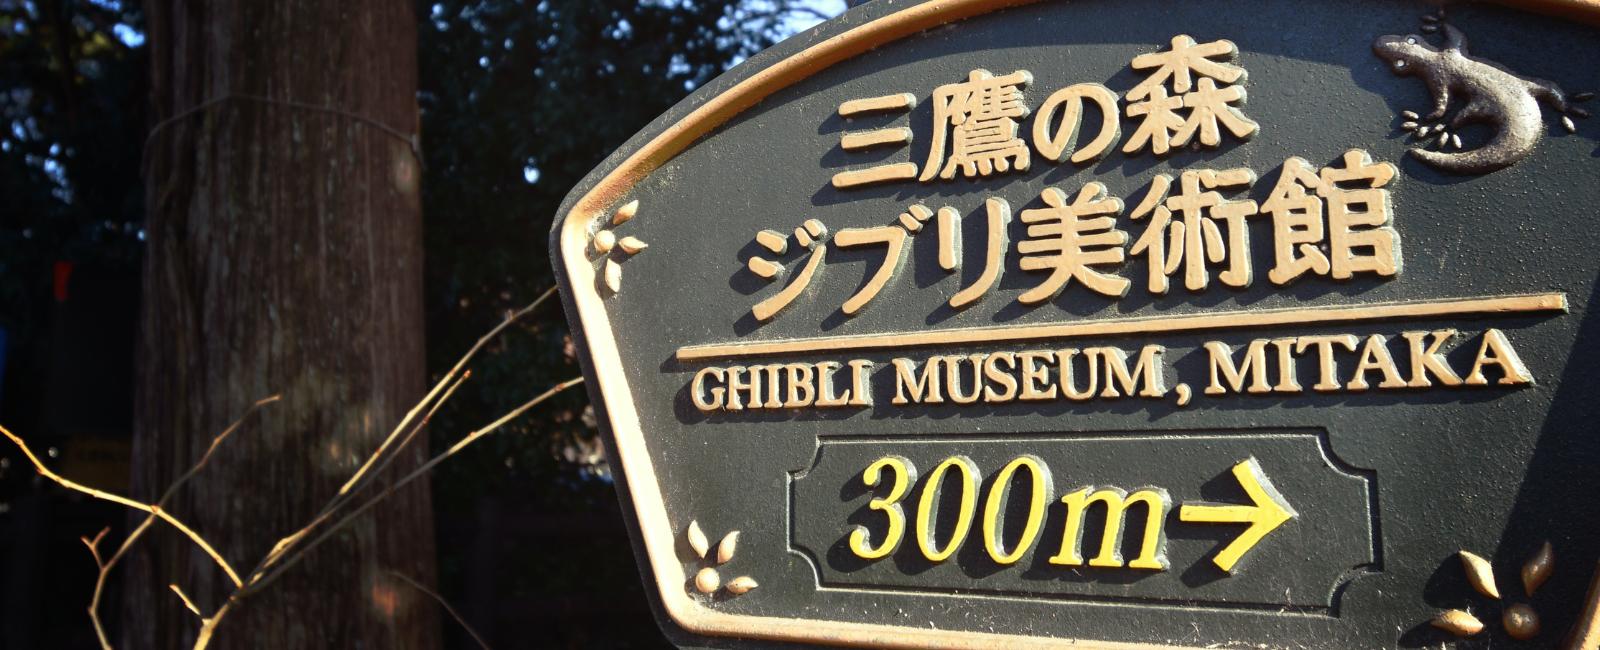 Ghibli Museum, Mitaka Sign